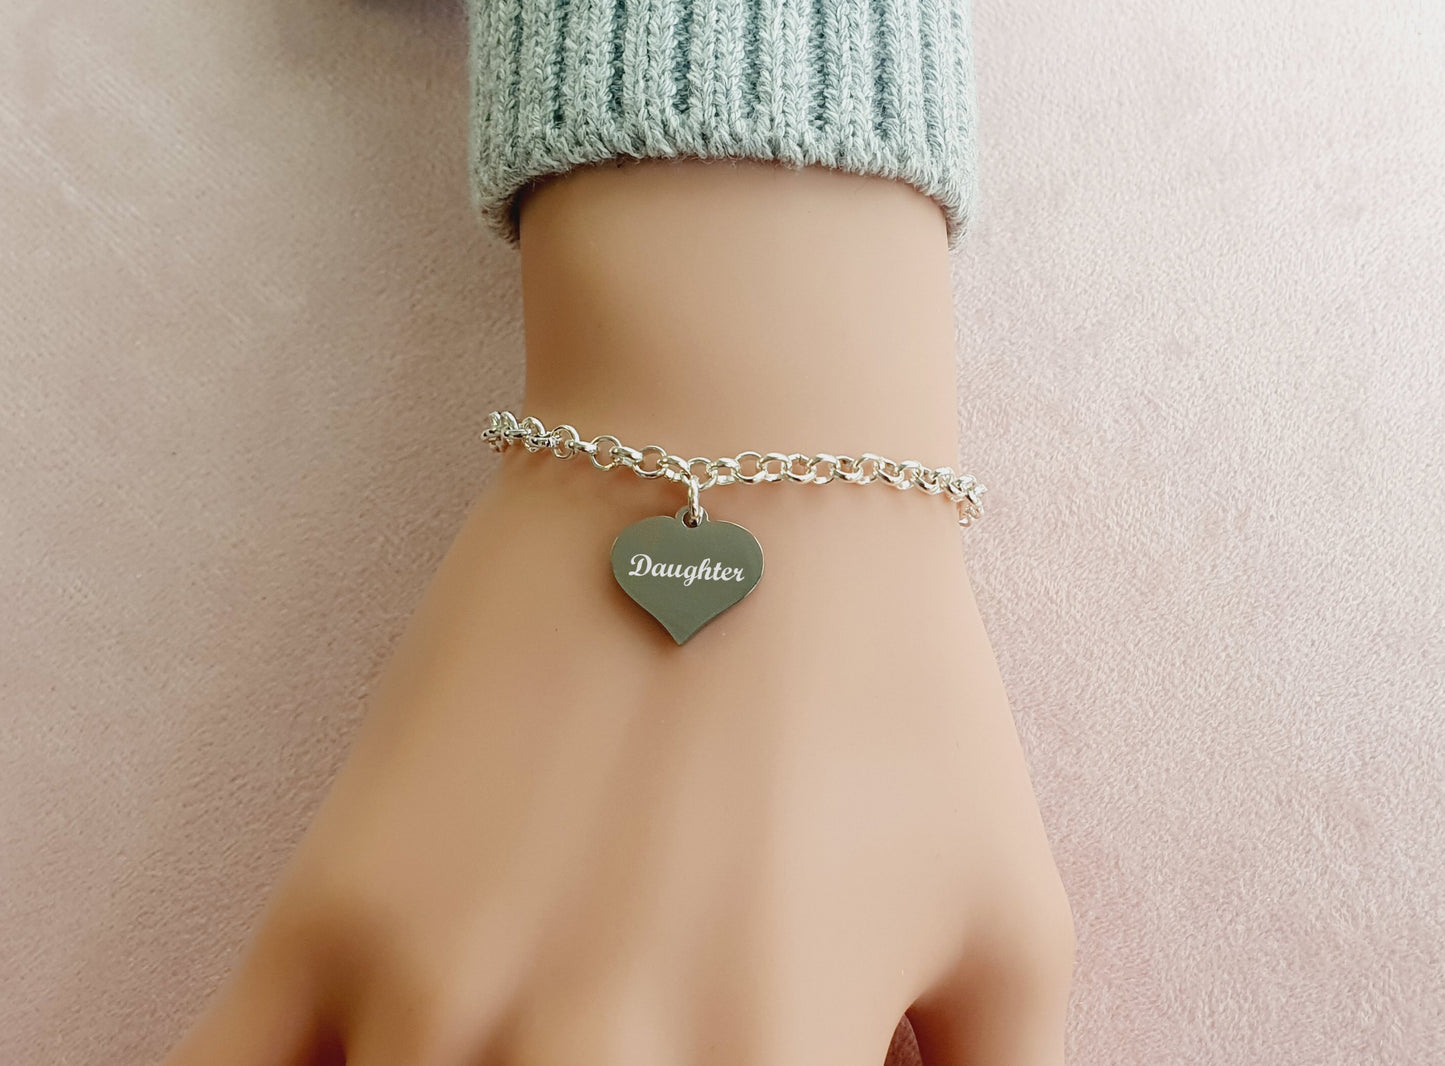 Daughter Engraved Heart Charm Link Bracelet, Gift for Girl's and Women